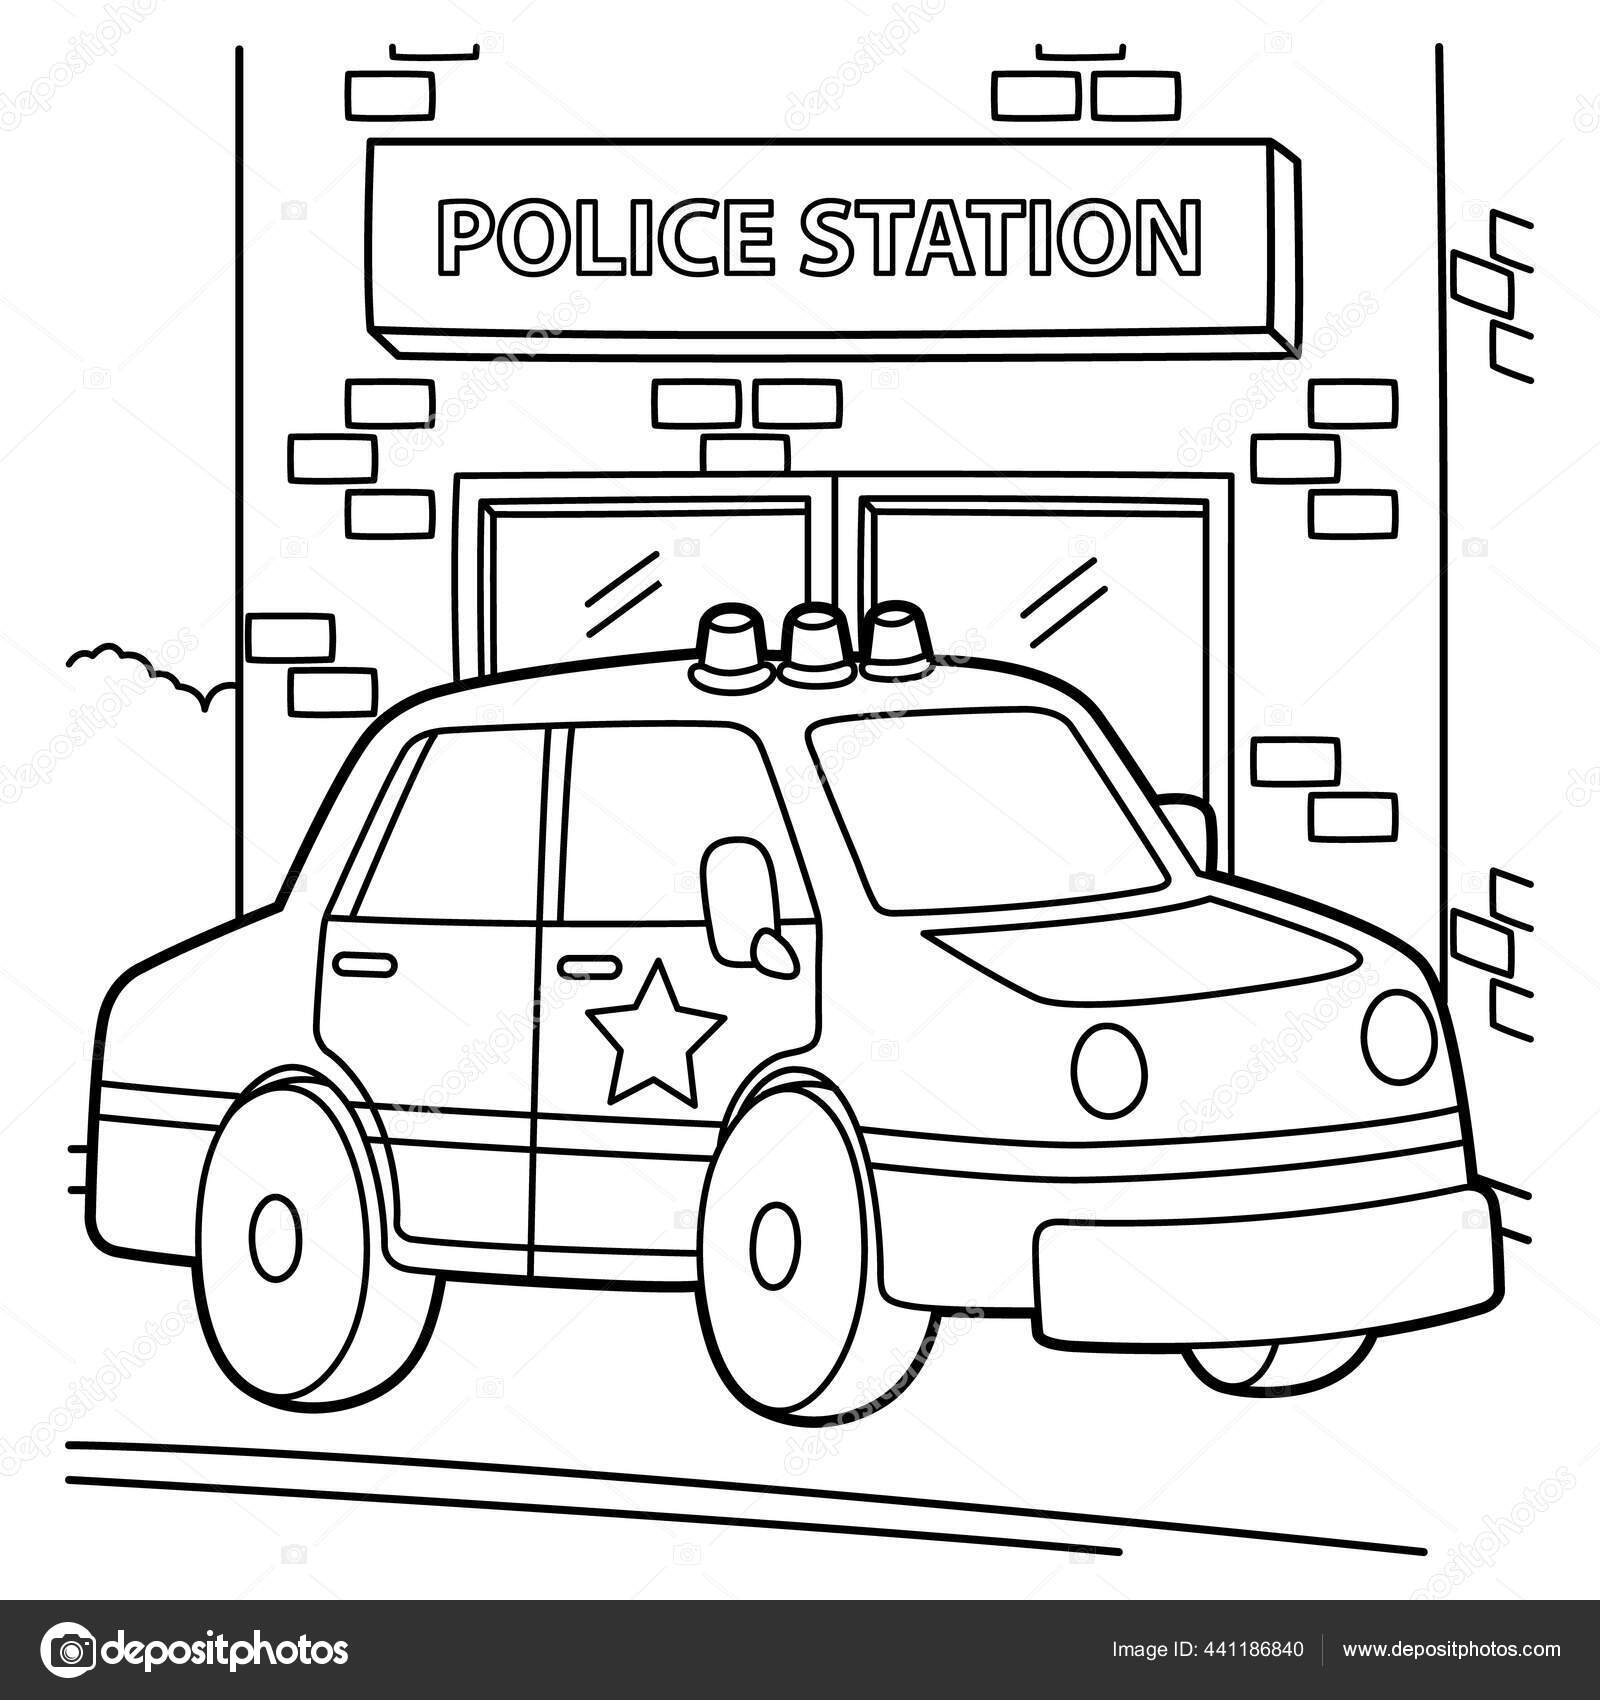 https://st2.depositphotos.com/24180758/44118/v/1600/depositphotos_441186840-stock-illustration-police-car-coloring-page.jpg